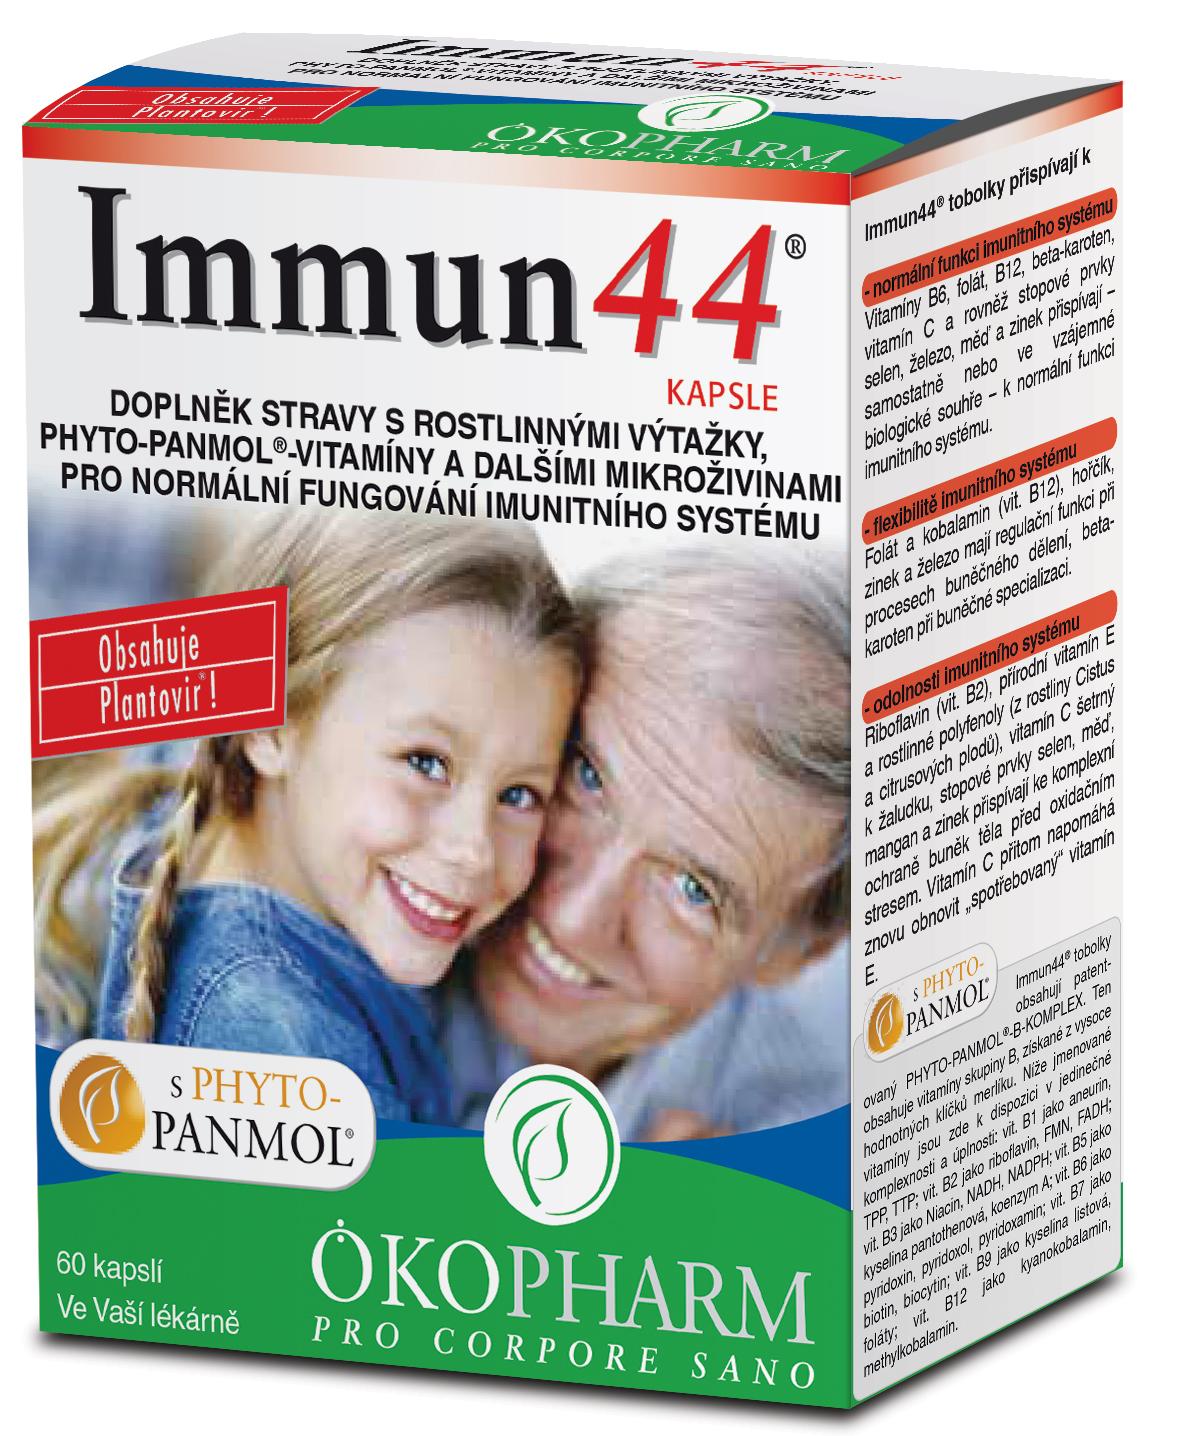 Immun44 balení